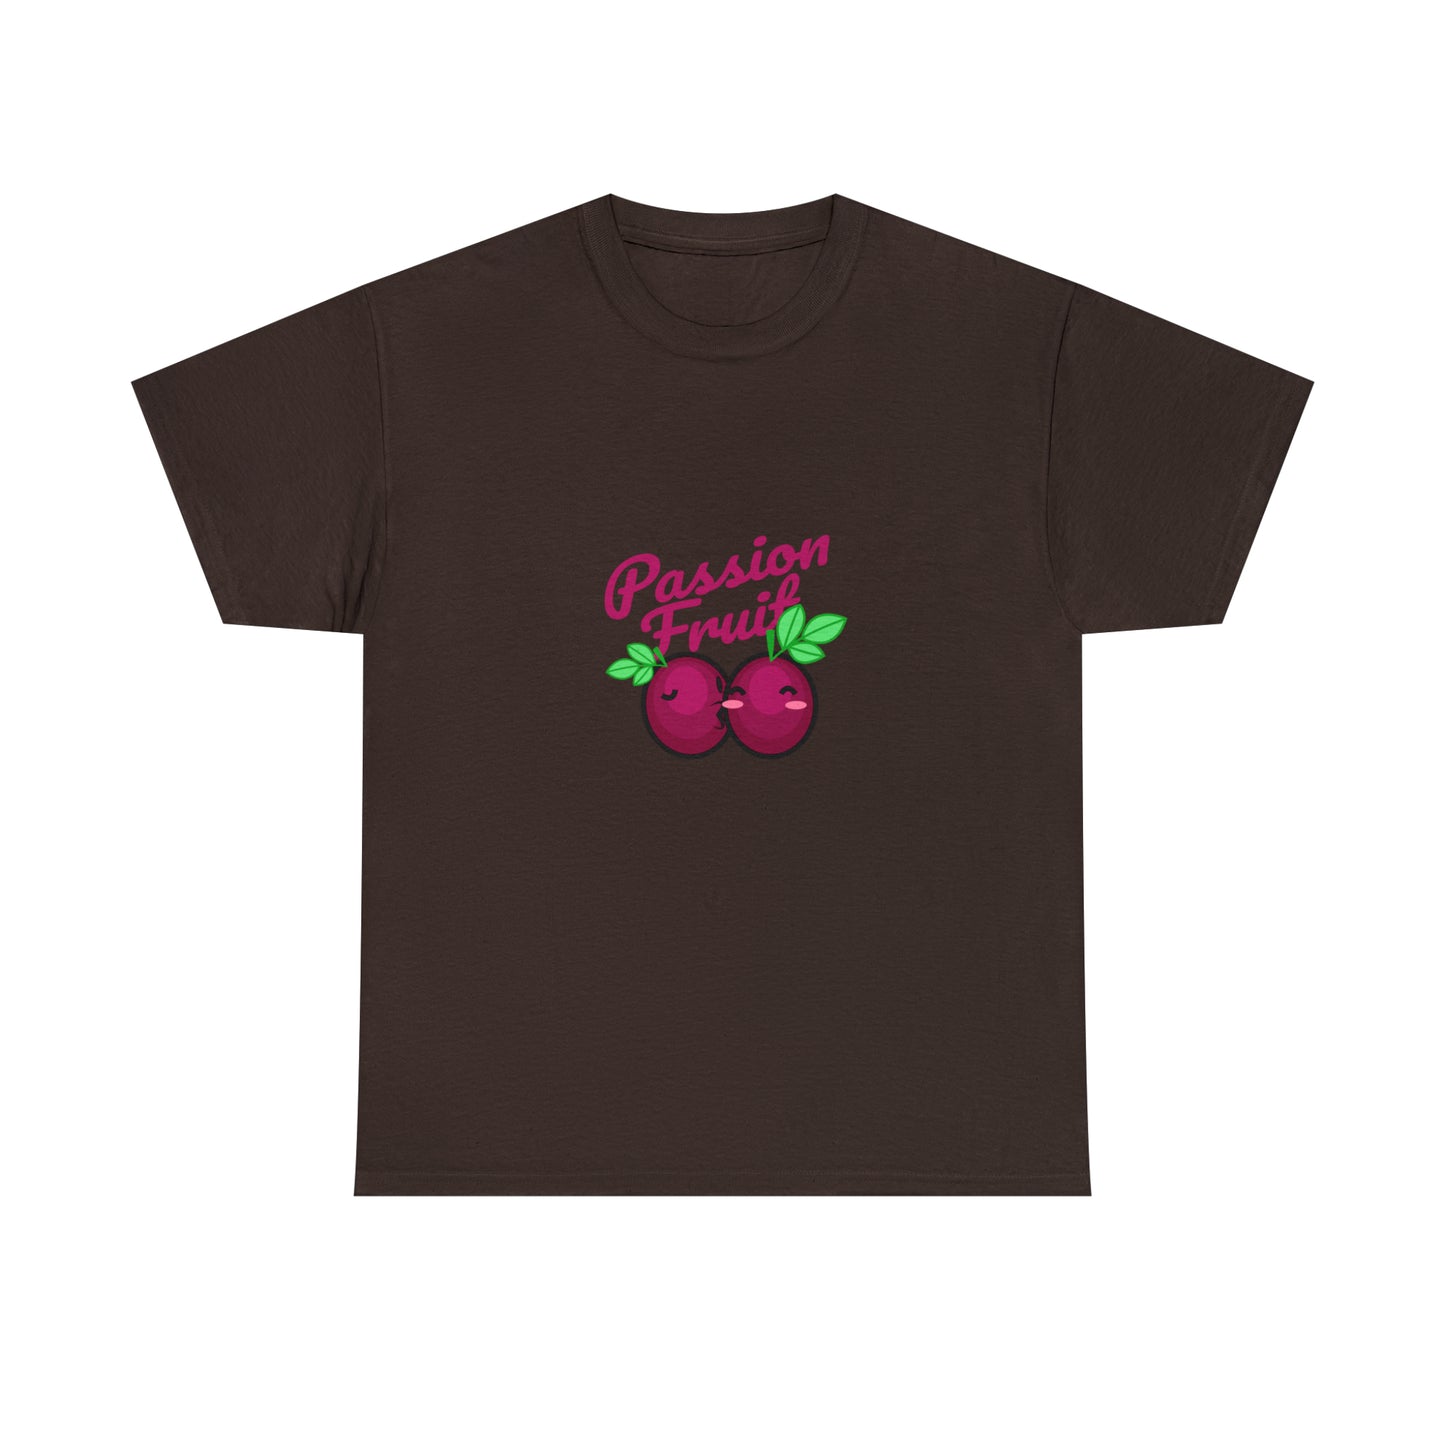 Custom Parody T-shirt, Passion fruit design